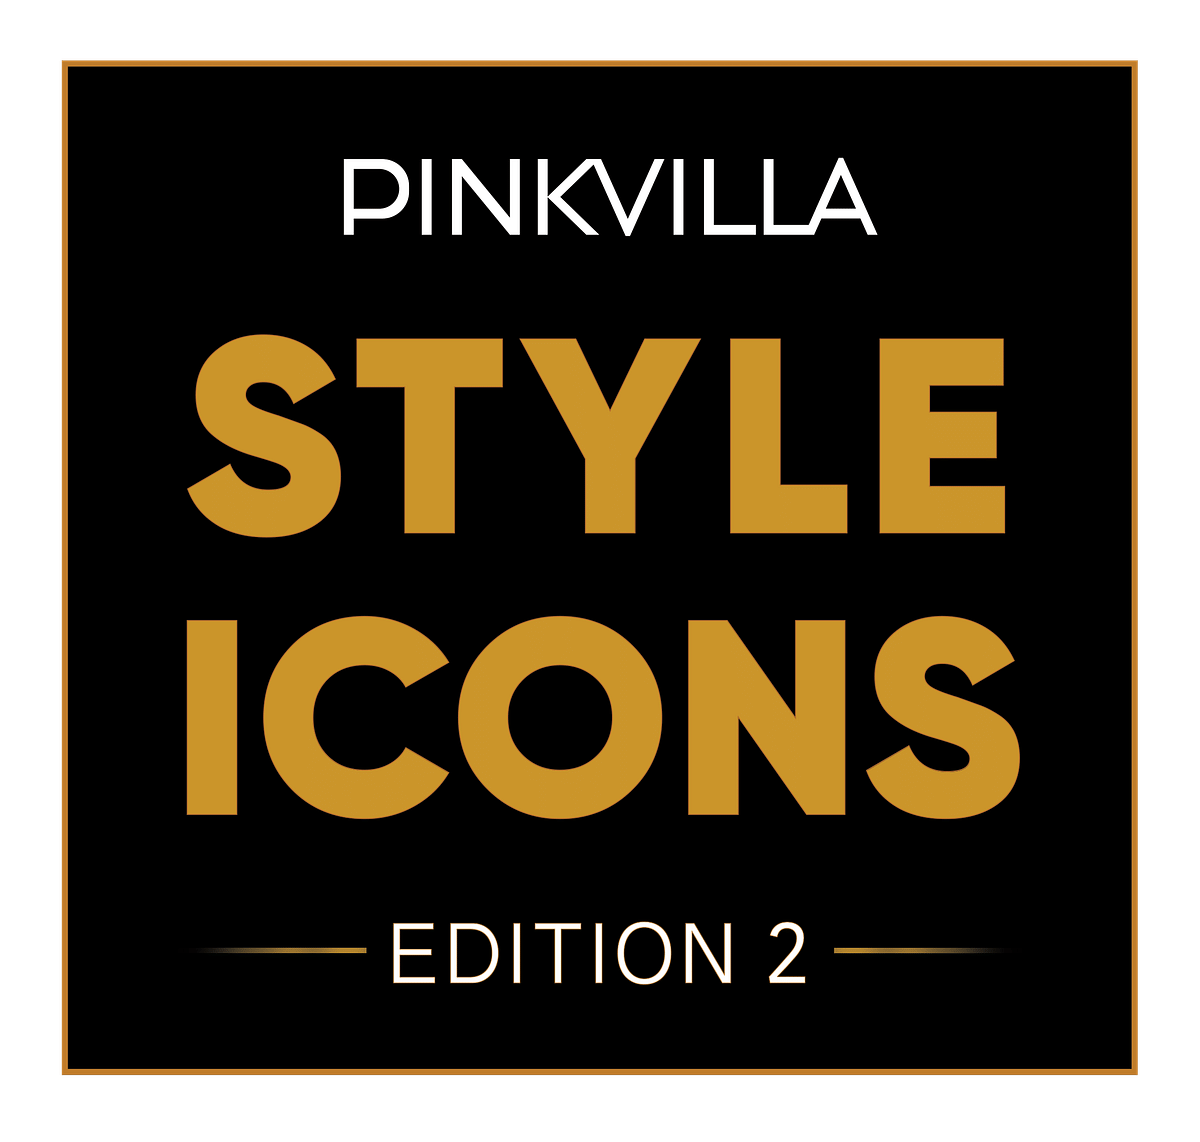 Celebrated industry titans Anaita Shroff Adajania, Eka Lakhani, Farah Khan, Manish Malhotra, Manisha Koirala & Sonali Bendre to preside as grand jury for the Pinkvilla Style Icons Edition 2 awards 